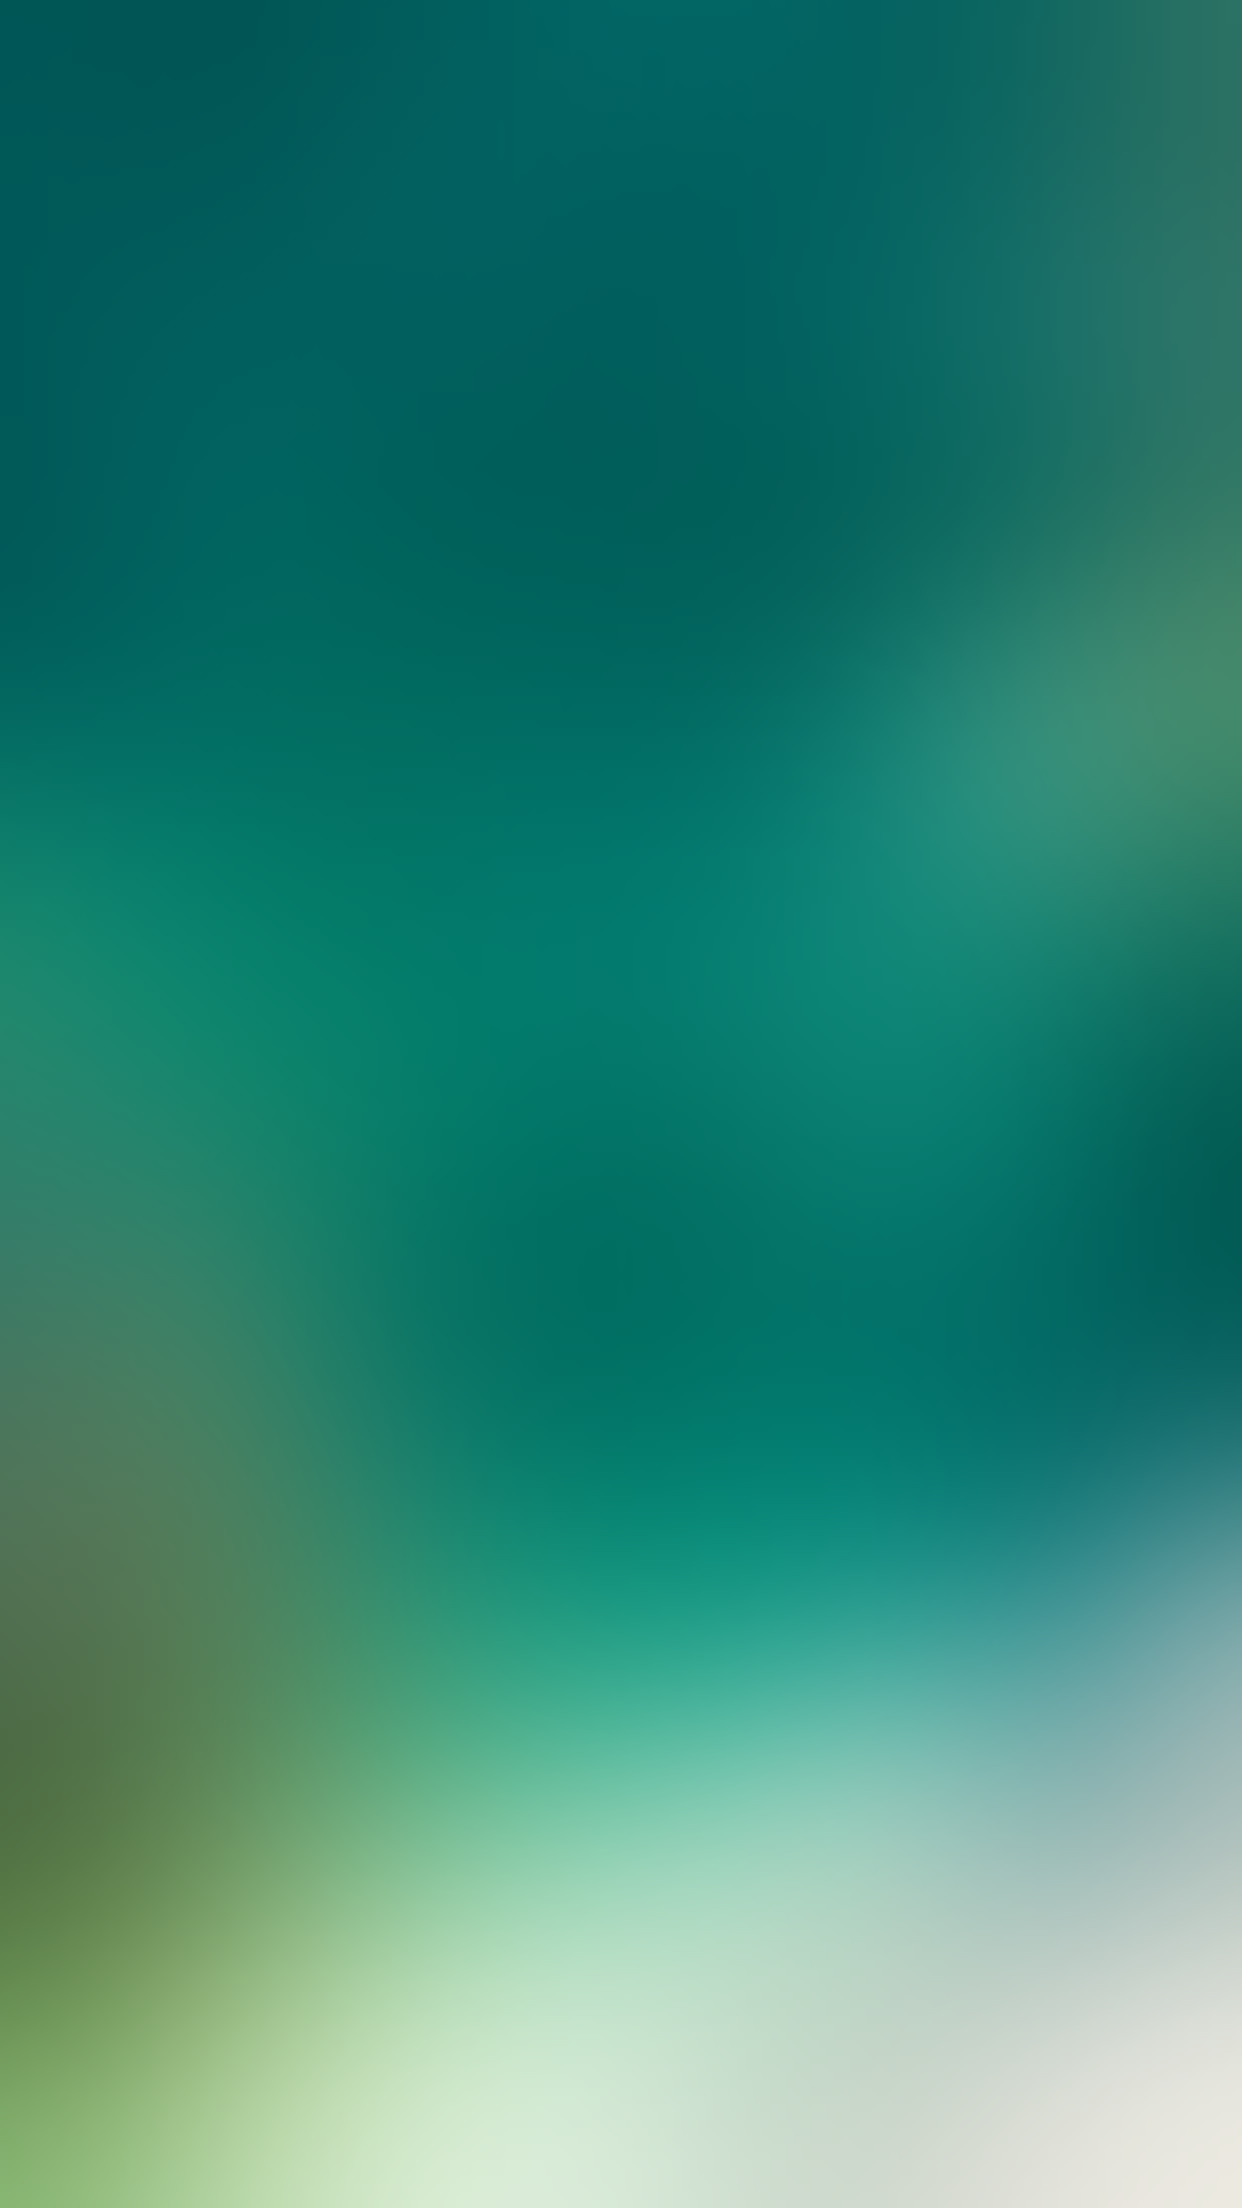 fond d'écran ios 10,vert,bleu,aqua,turquoise,jour